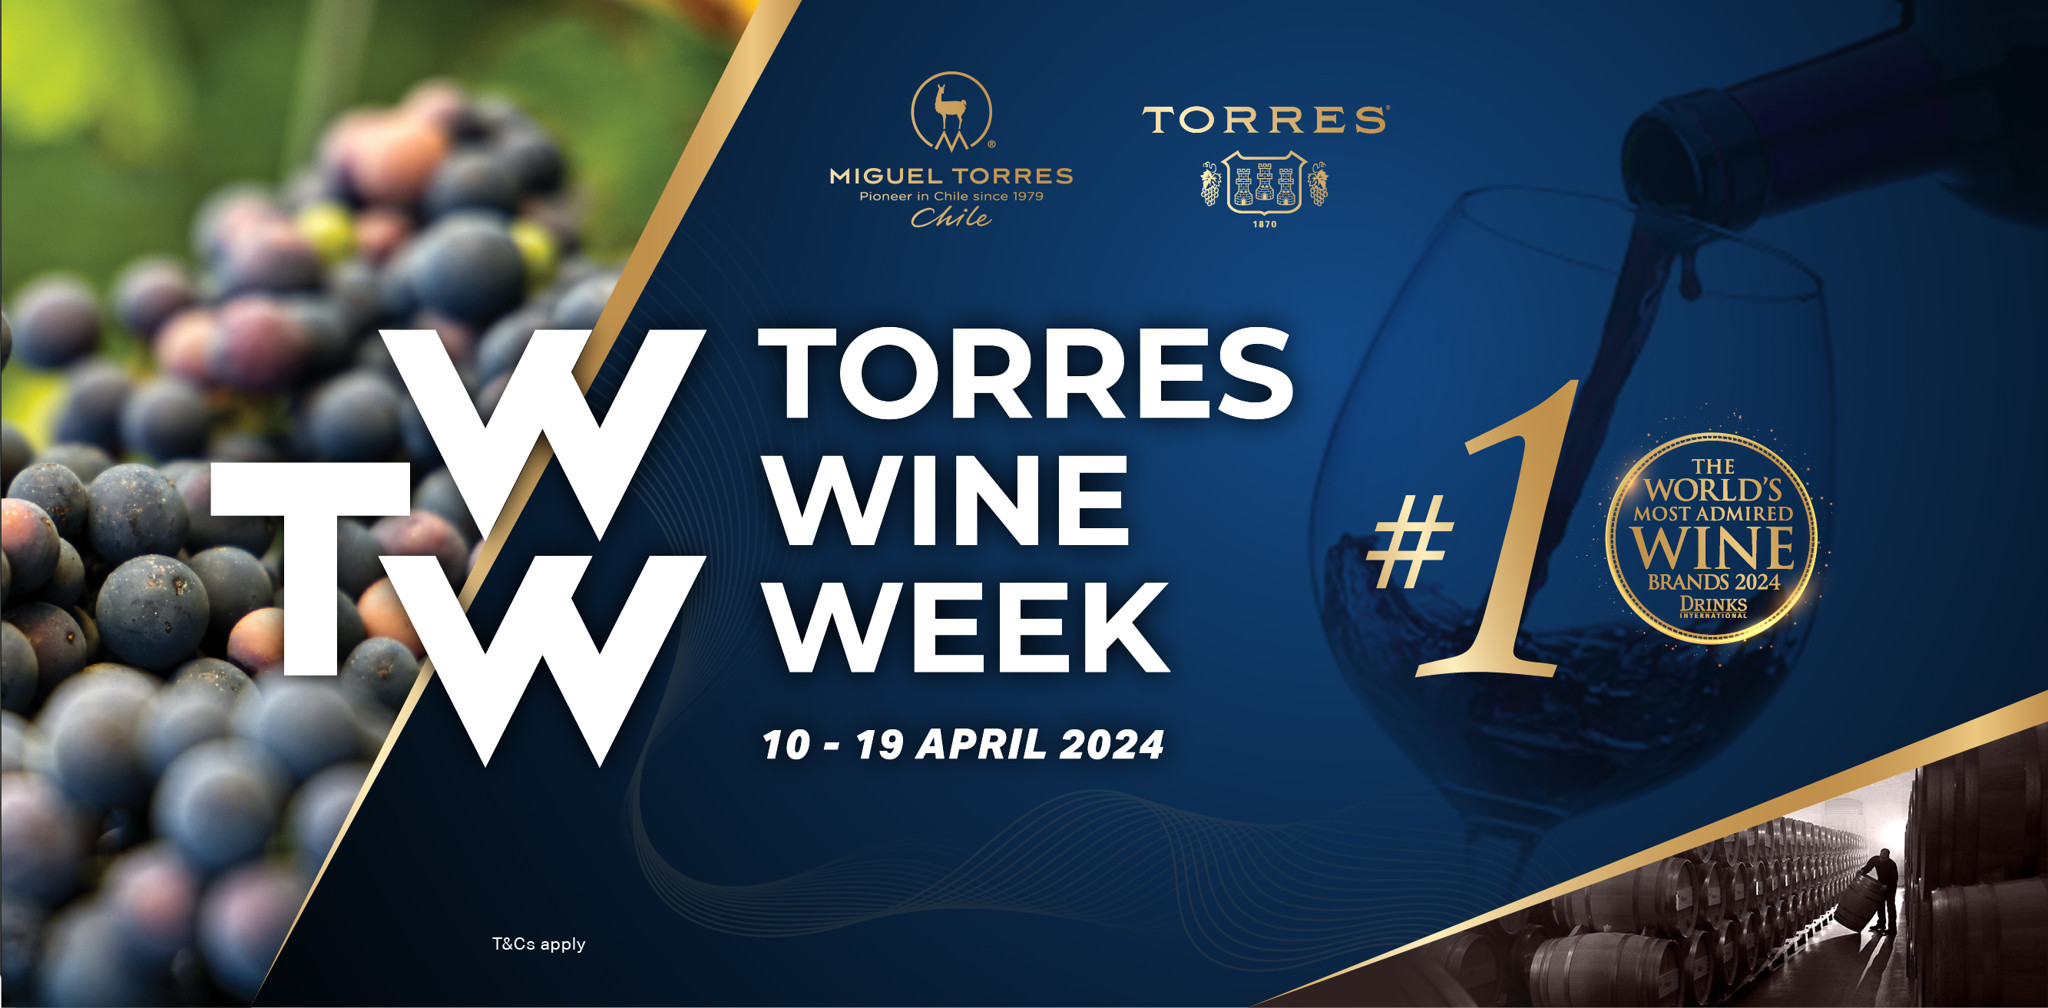 TORRES WINE WEEK | #1 THE WORLD’S MOST ADMIRED WINE BRANDS 2024!